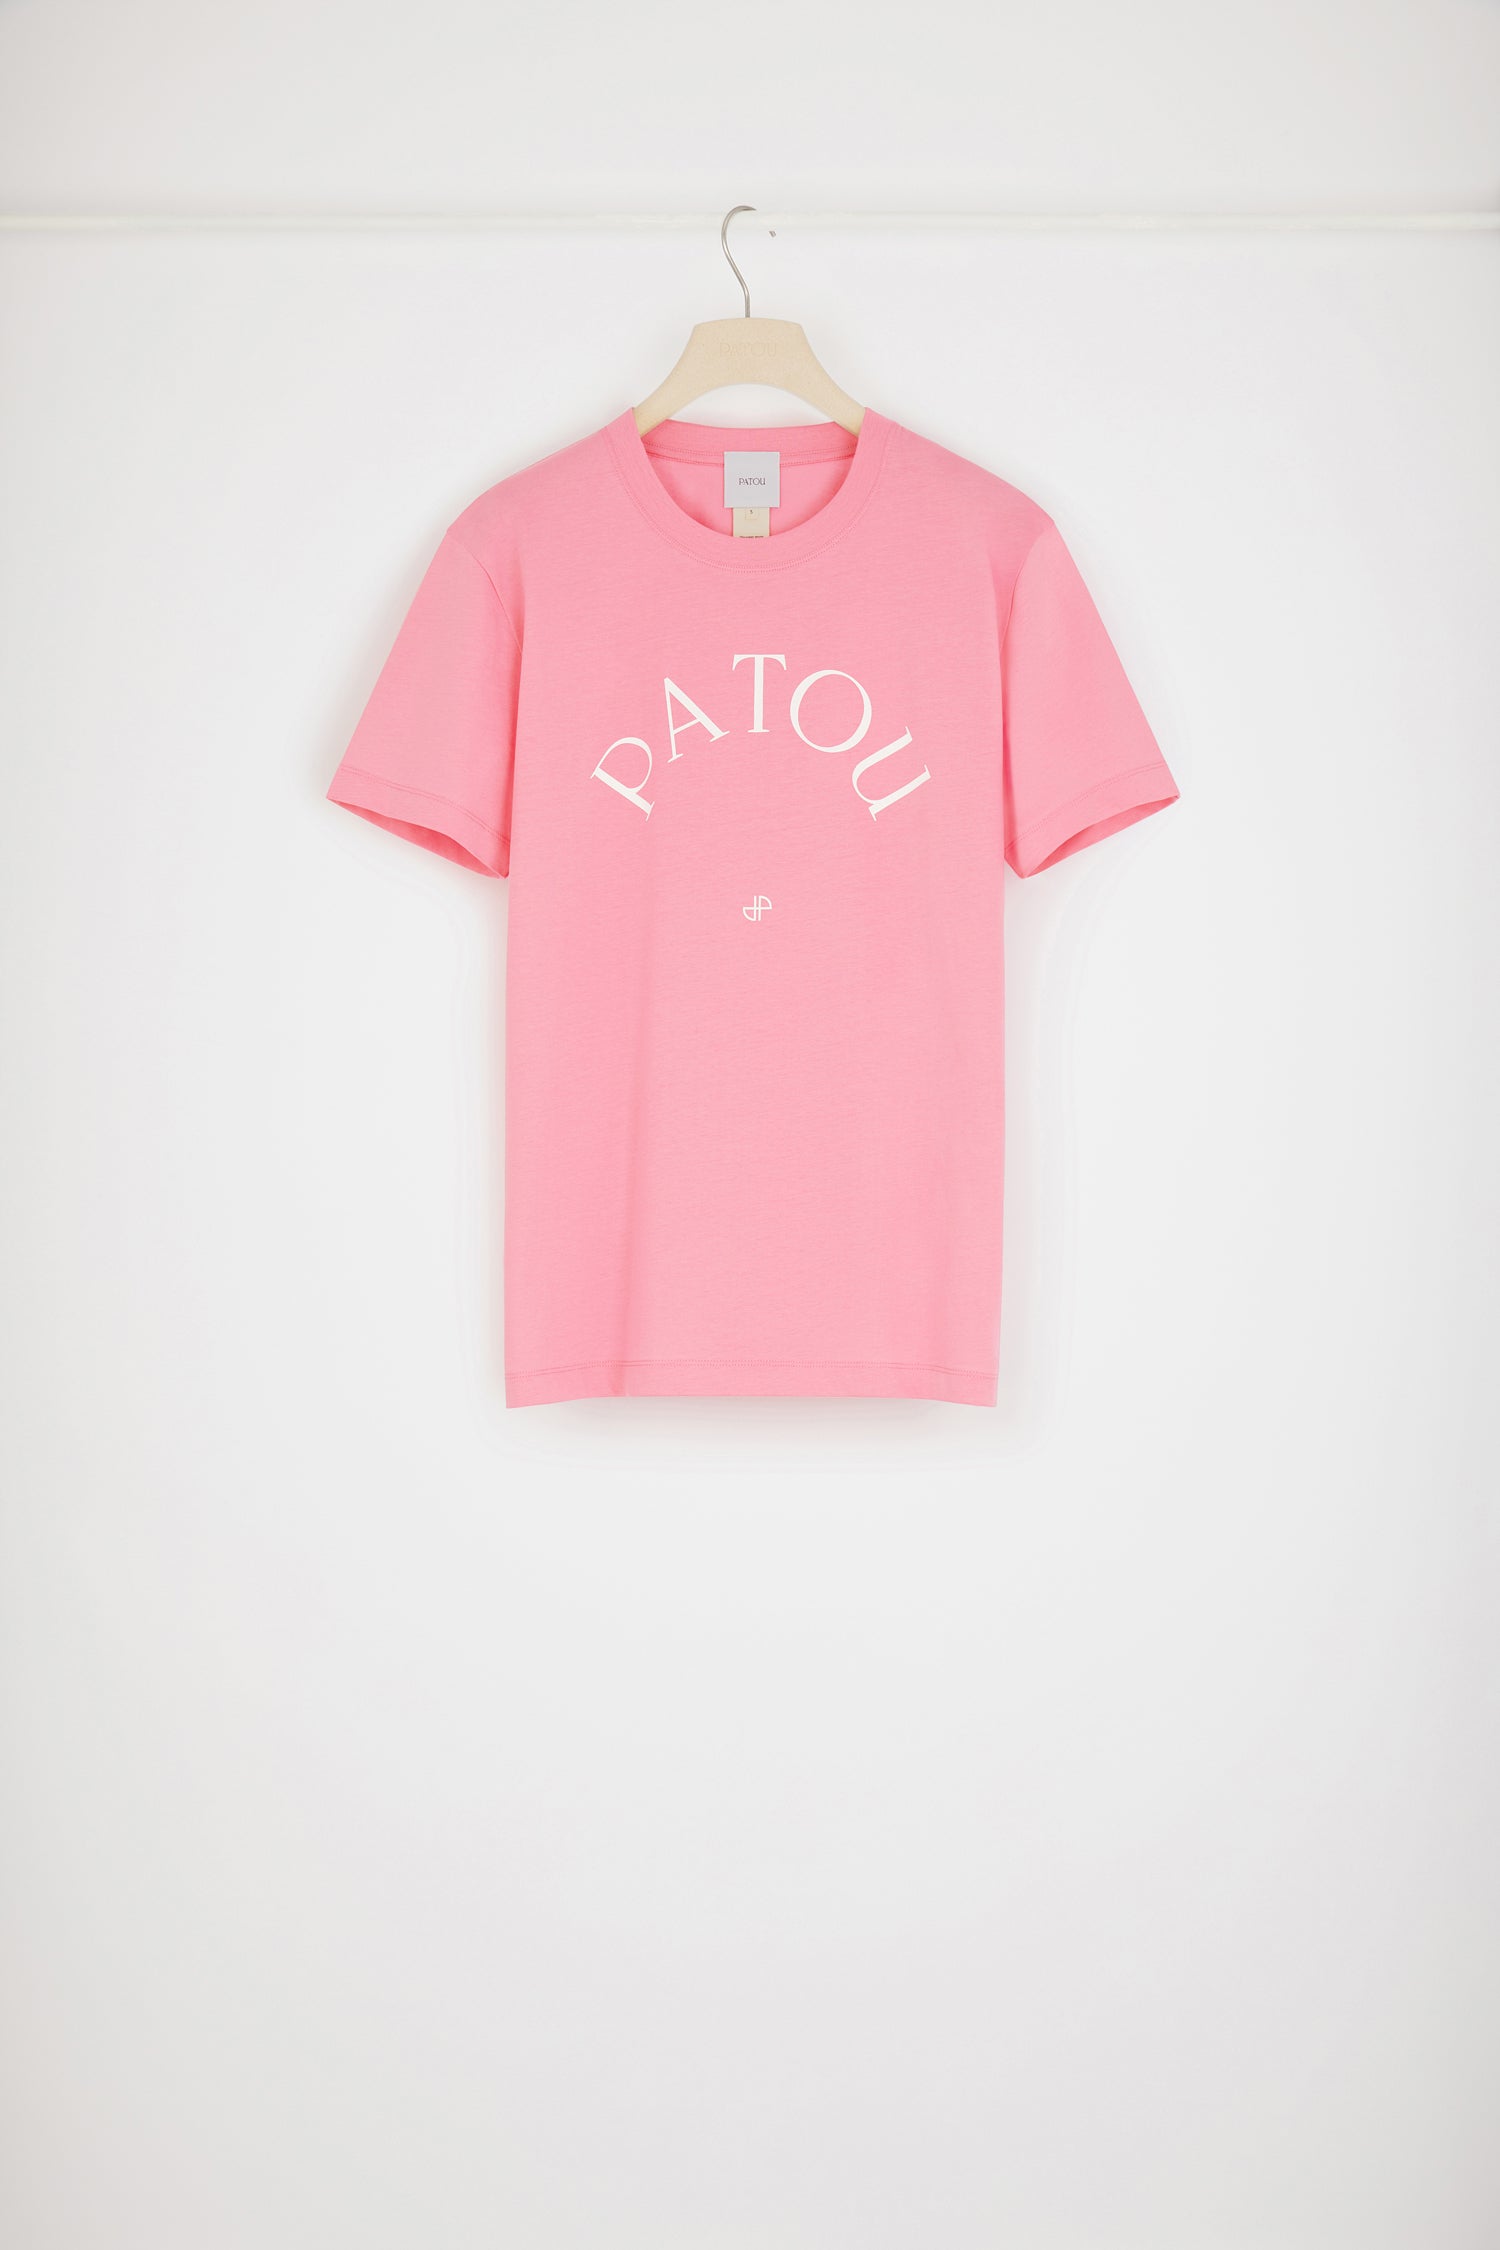 patou Tシャツ ピンク 完全正規品